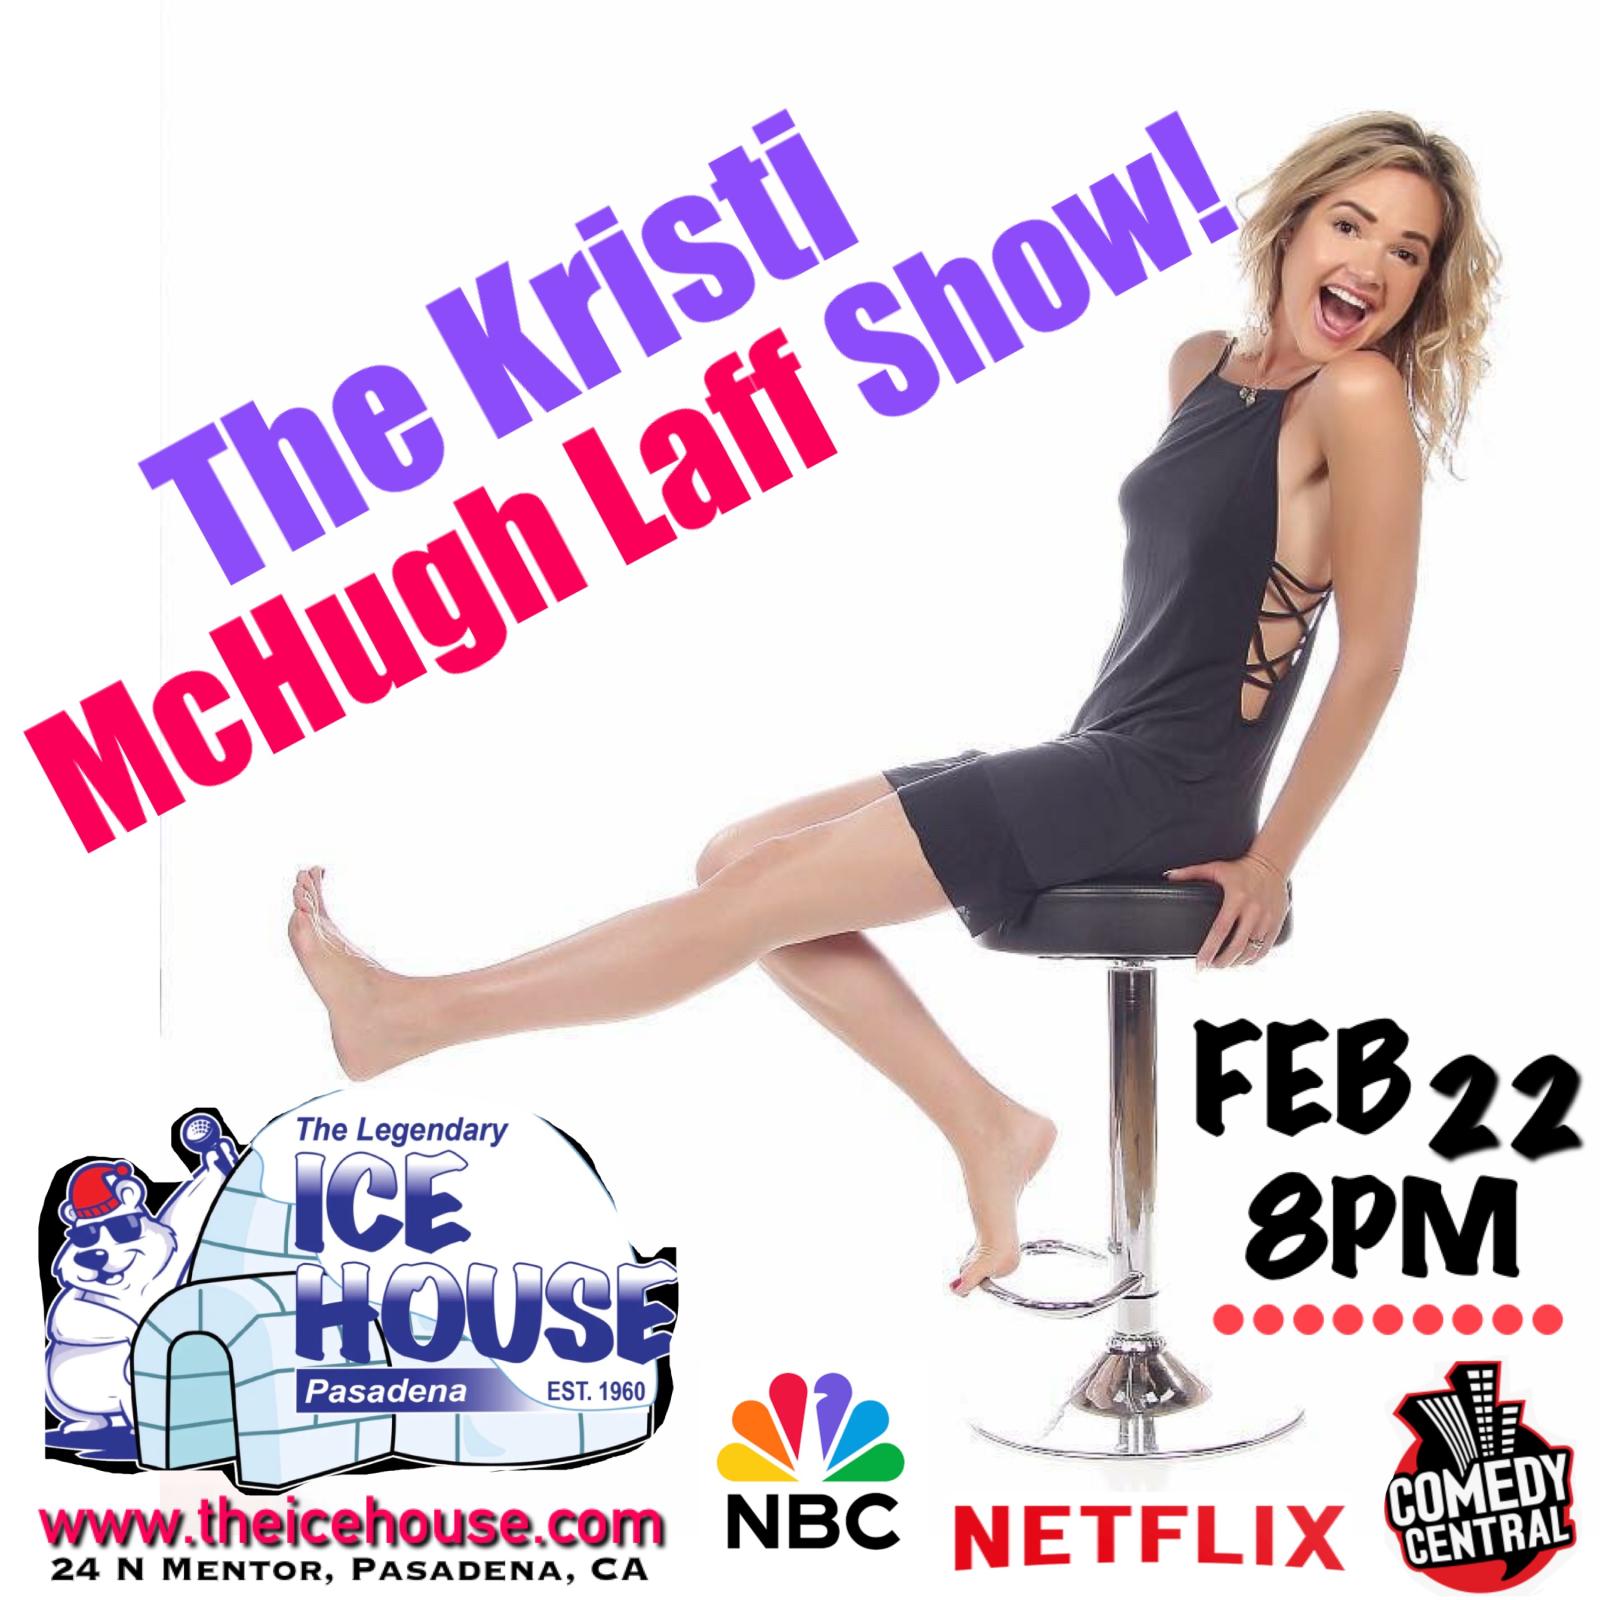 The Kristi Mc Huge Laff Show